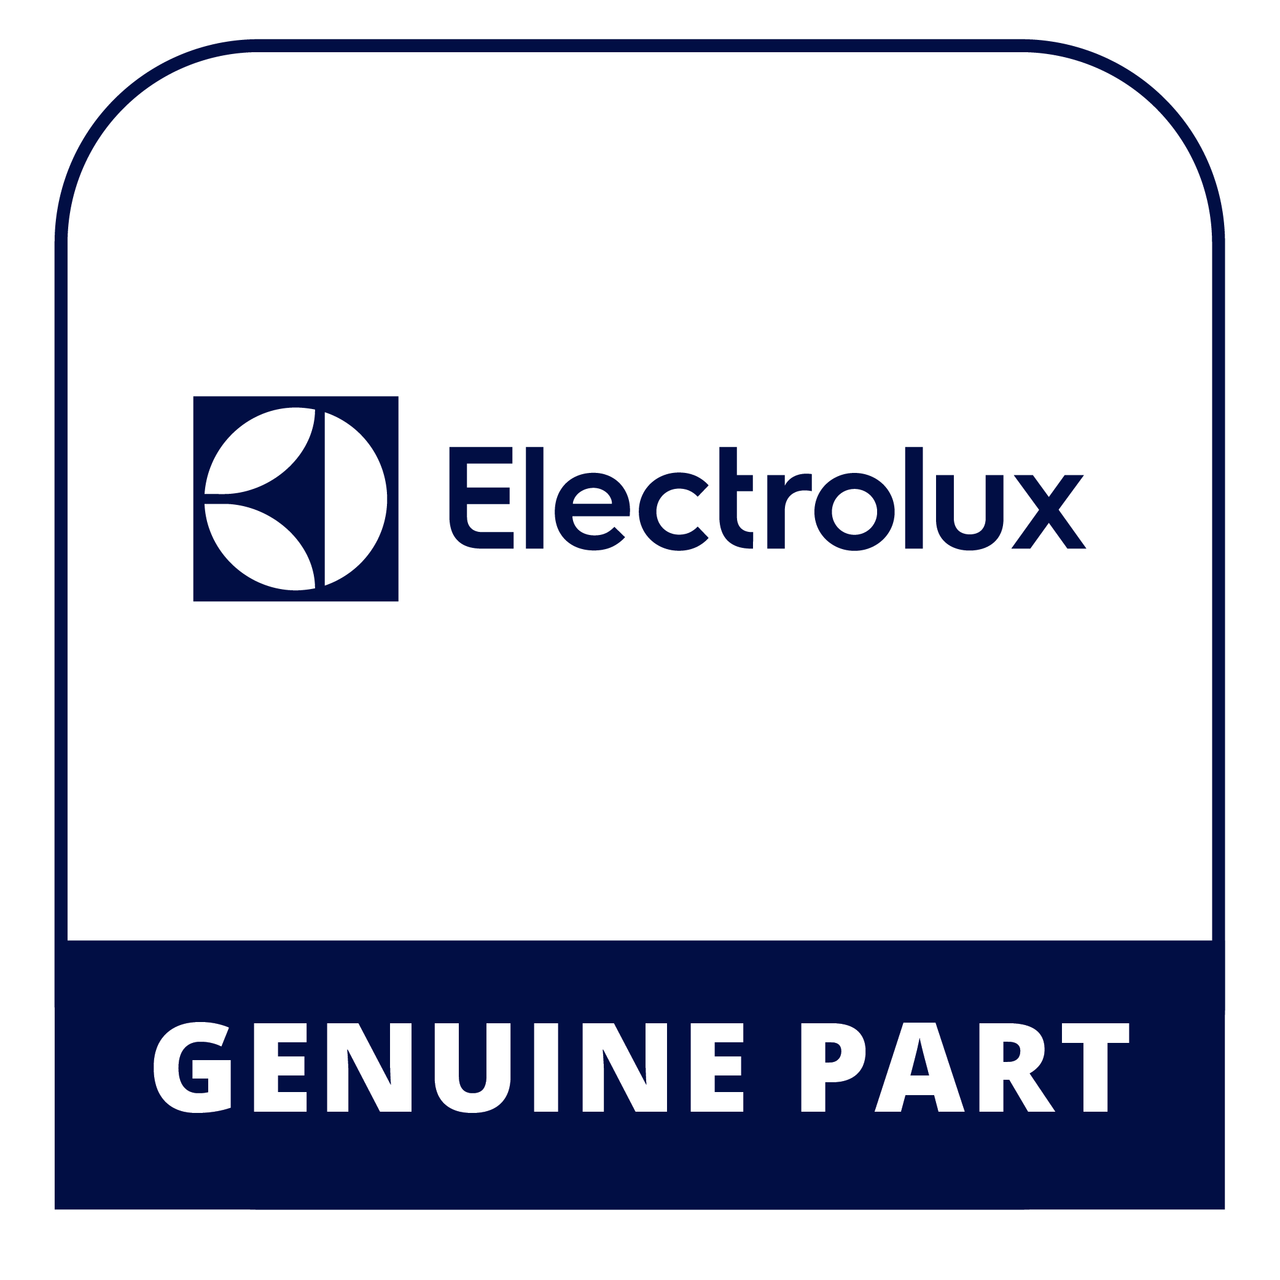 Frigidaire - Electrolux 5304519958 Label-Energy E-Star - Genuine Electrolux Part